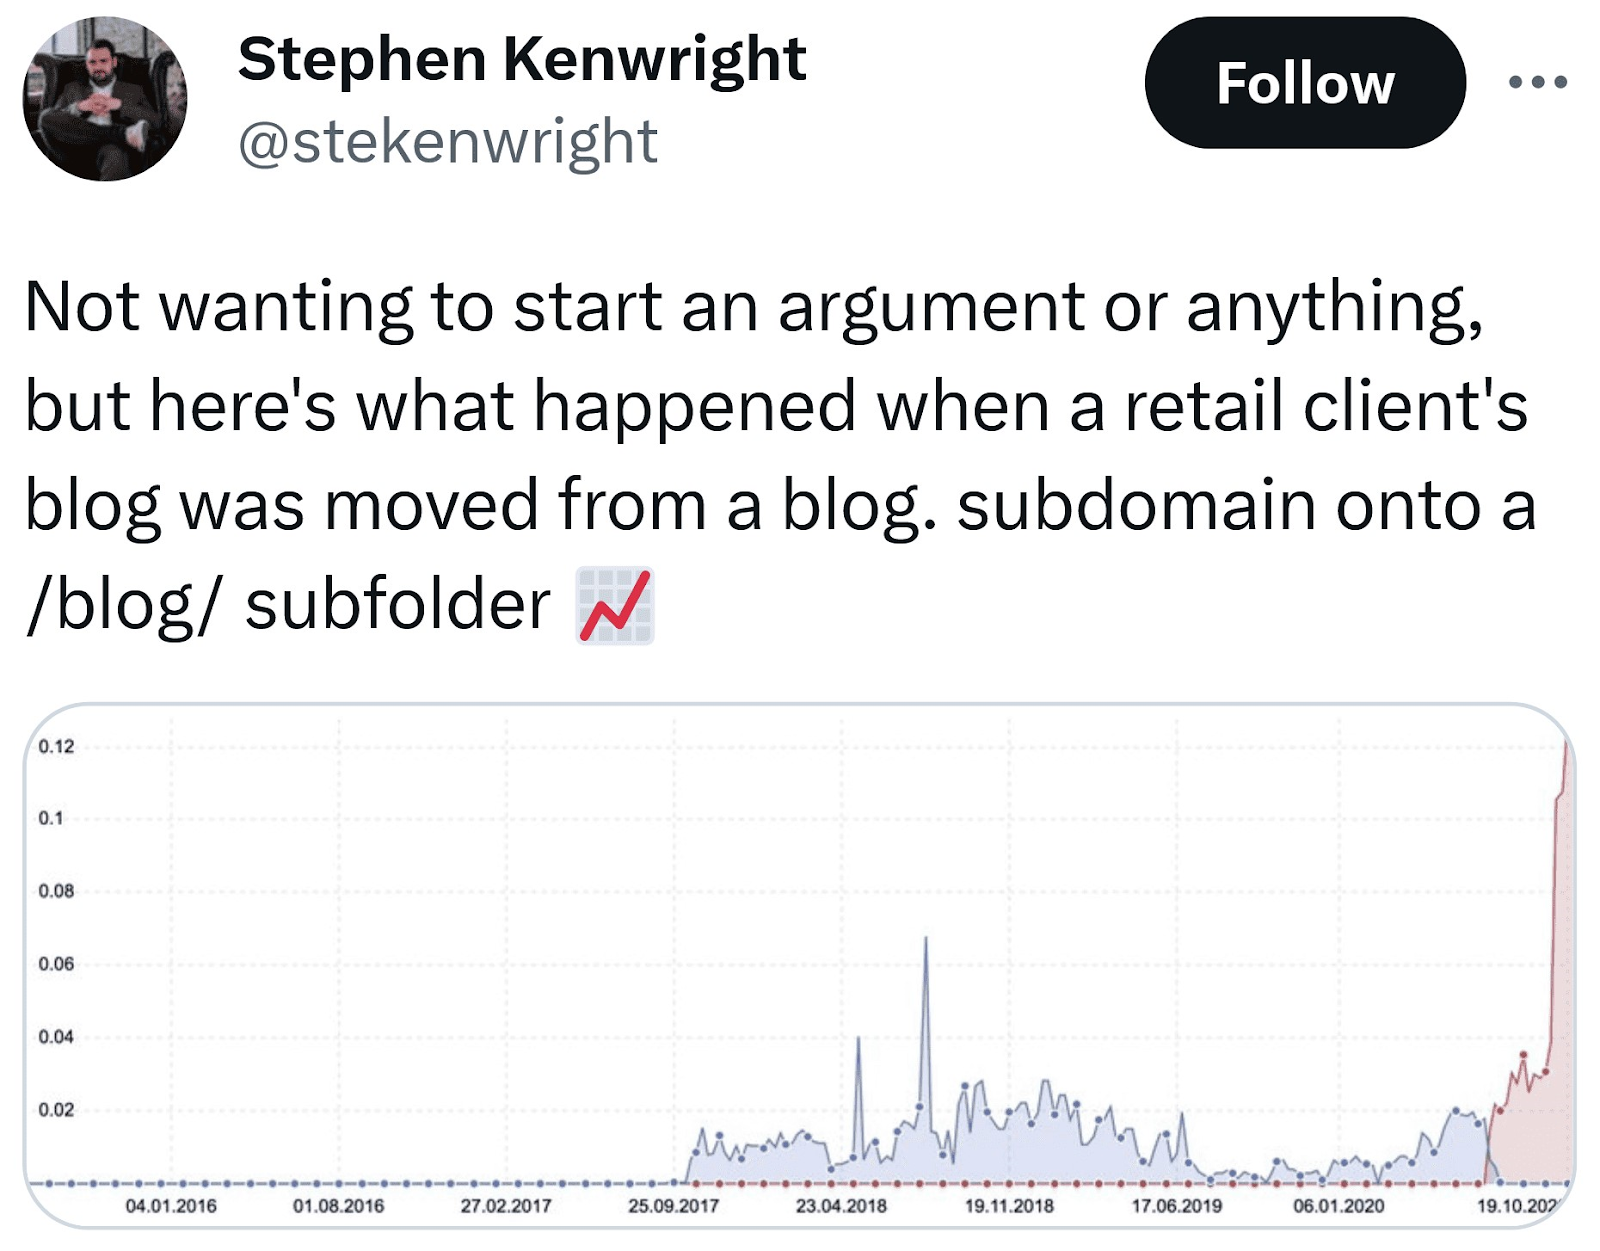 Stephen Kenwright’s Twitter post